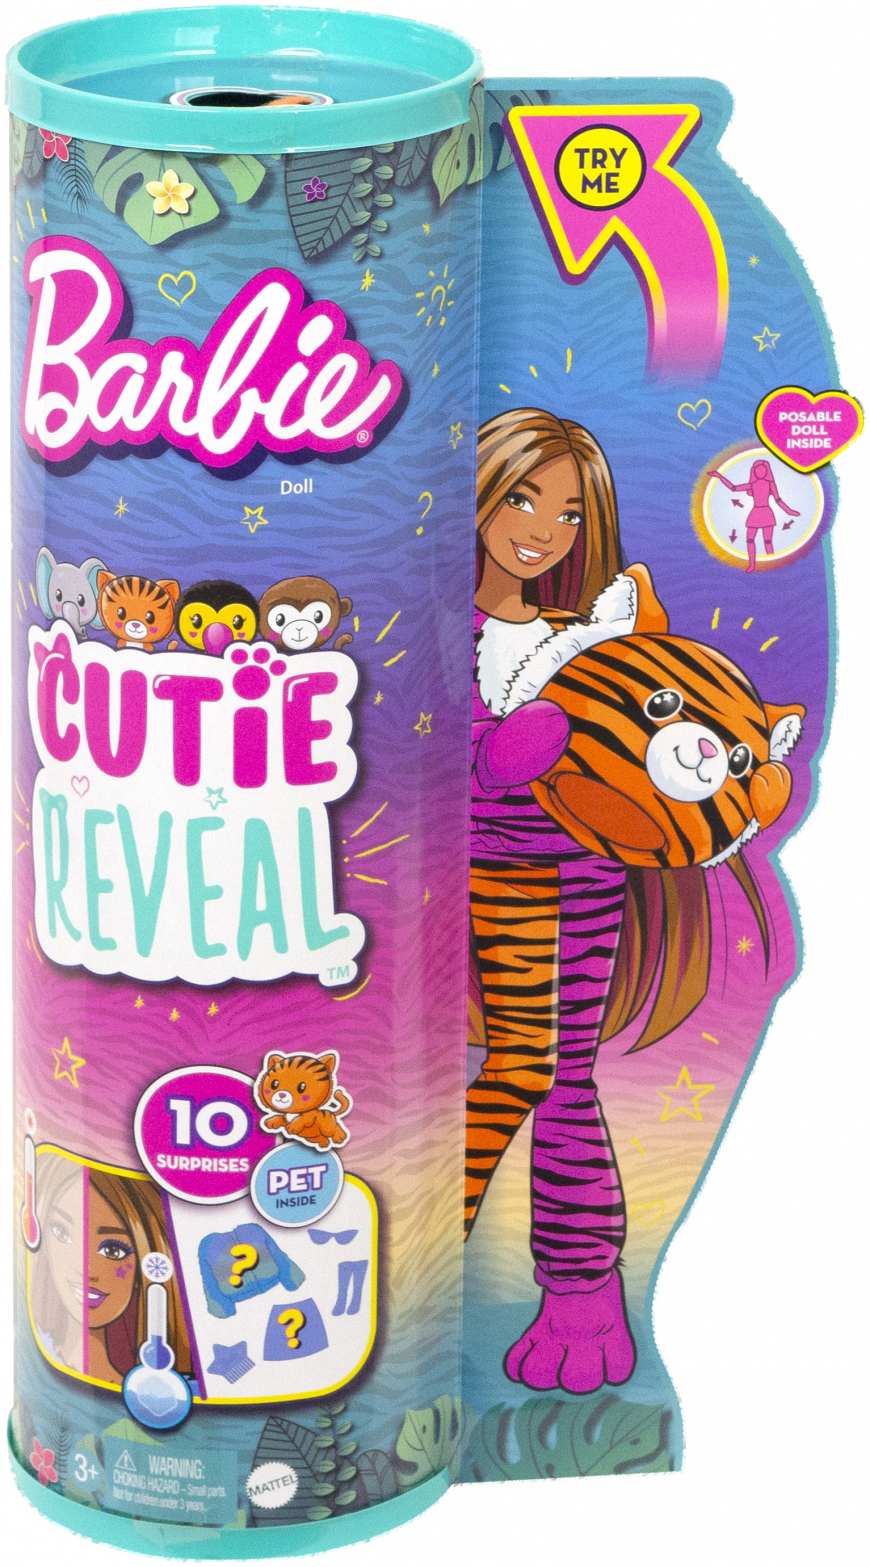 Barbie Curie Reveal series 4 Jungle dolls